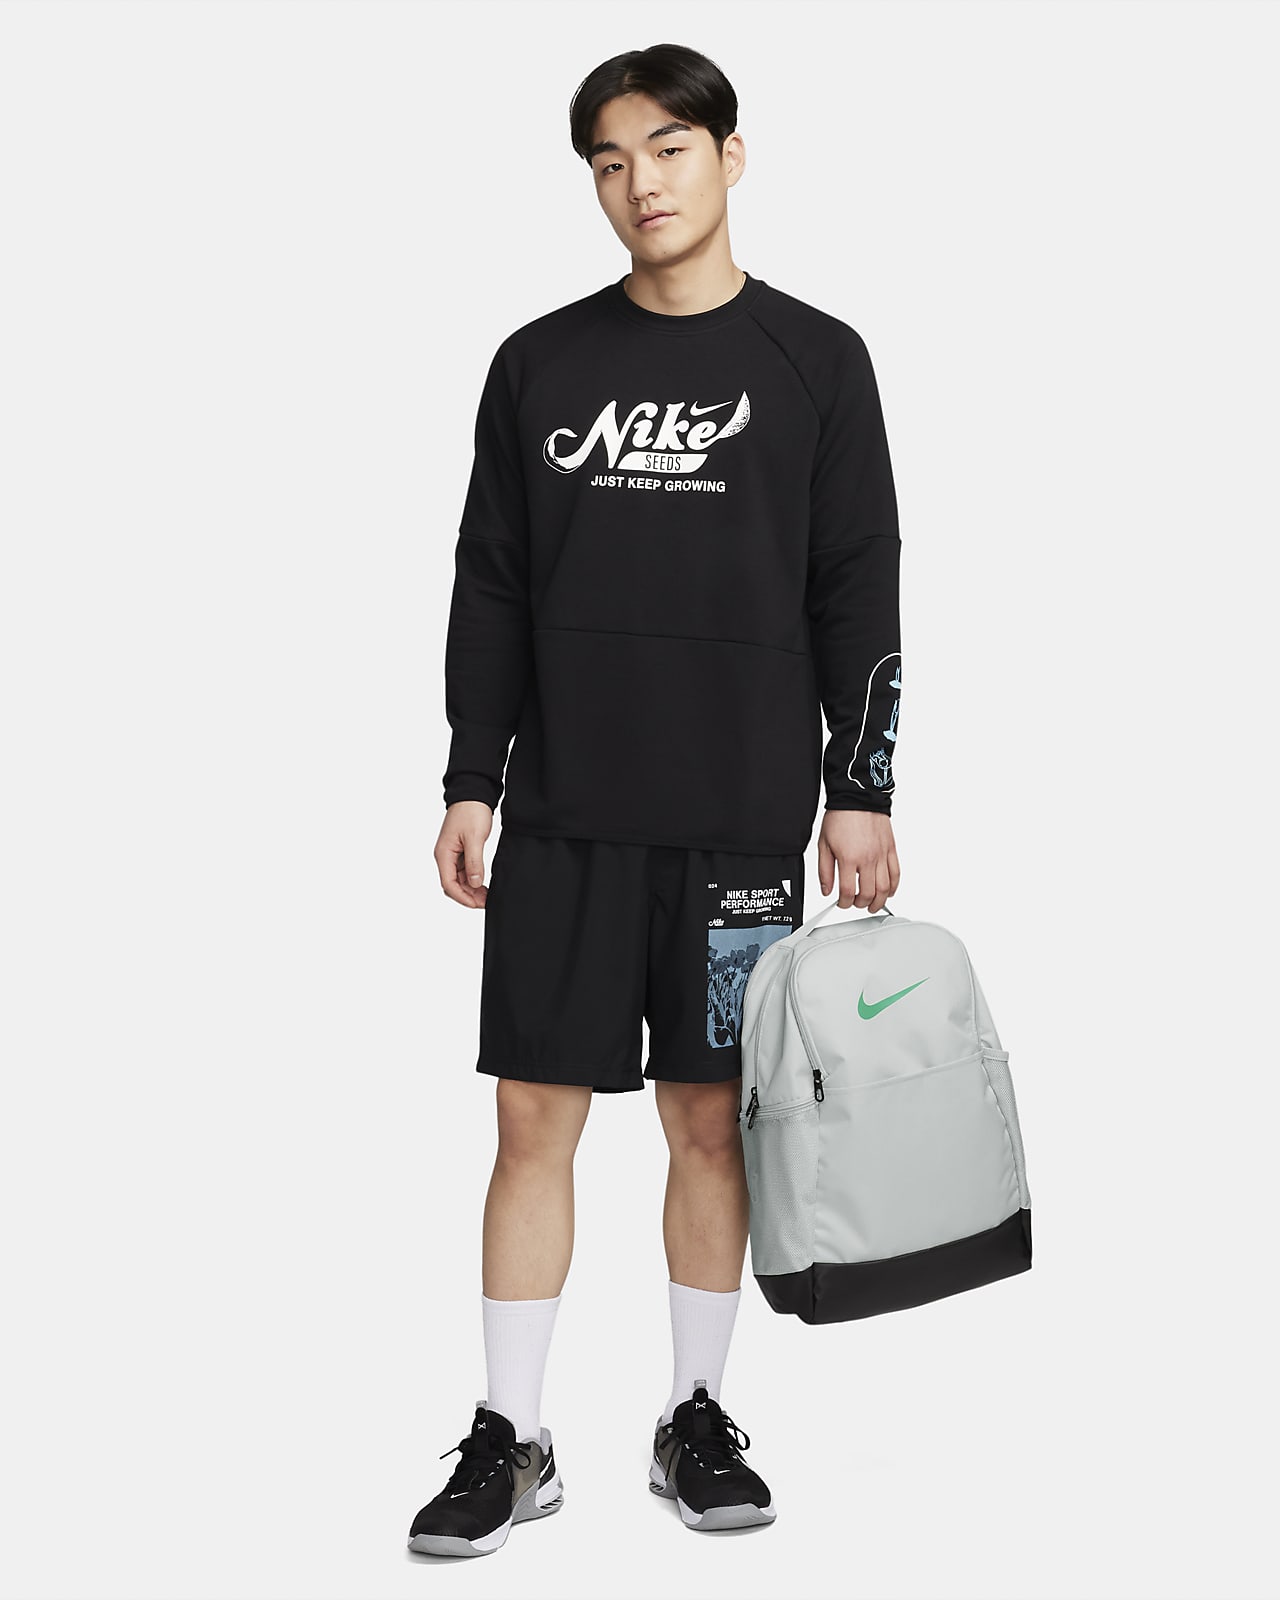 Nike Brasilia Medium Backpack - NKDH7709 – CTOS Gear